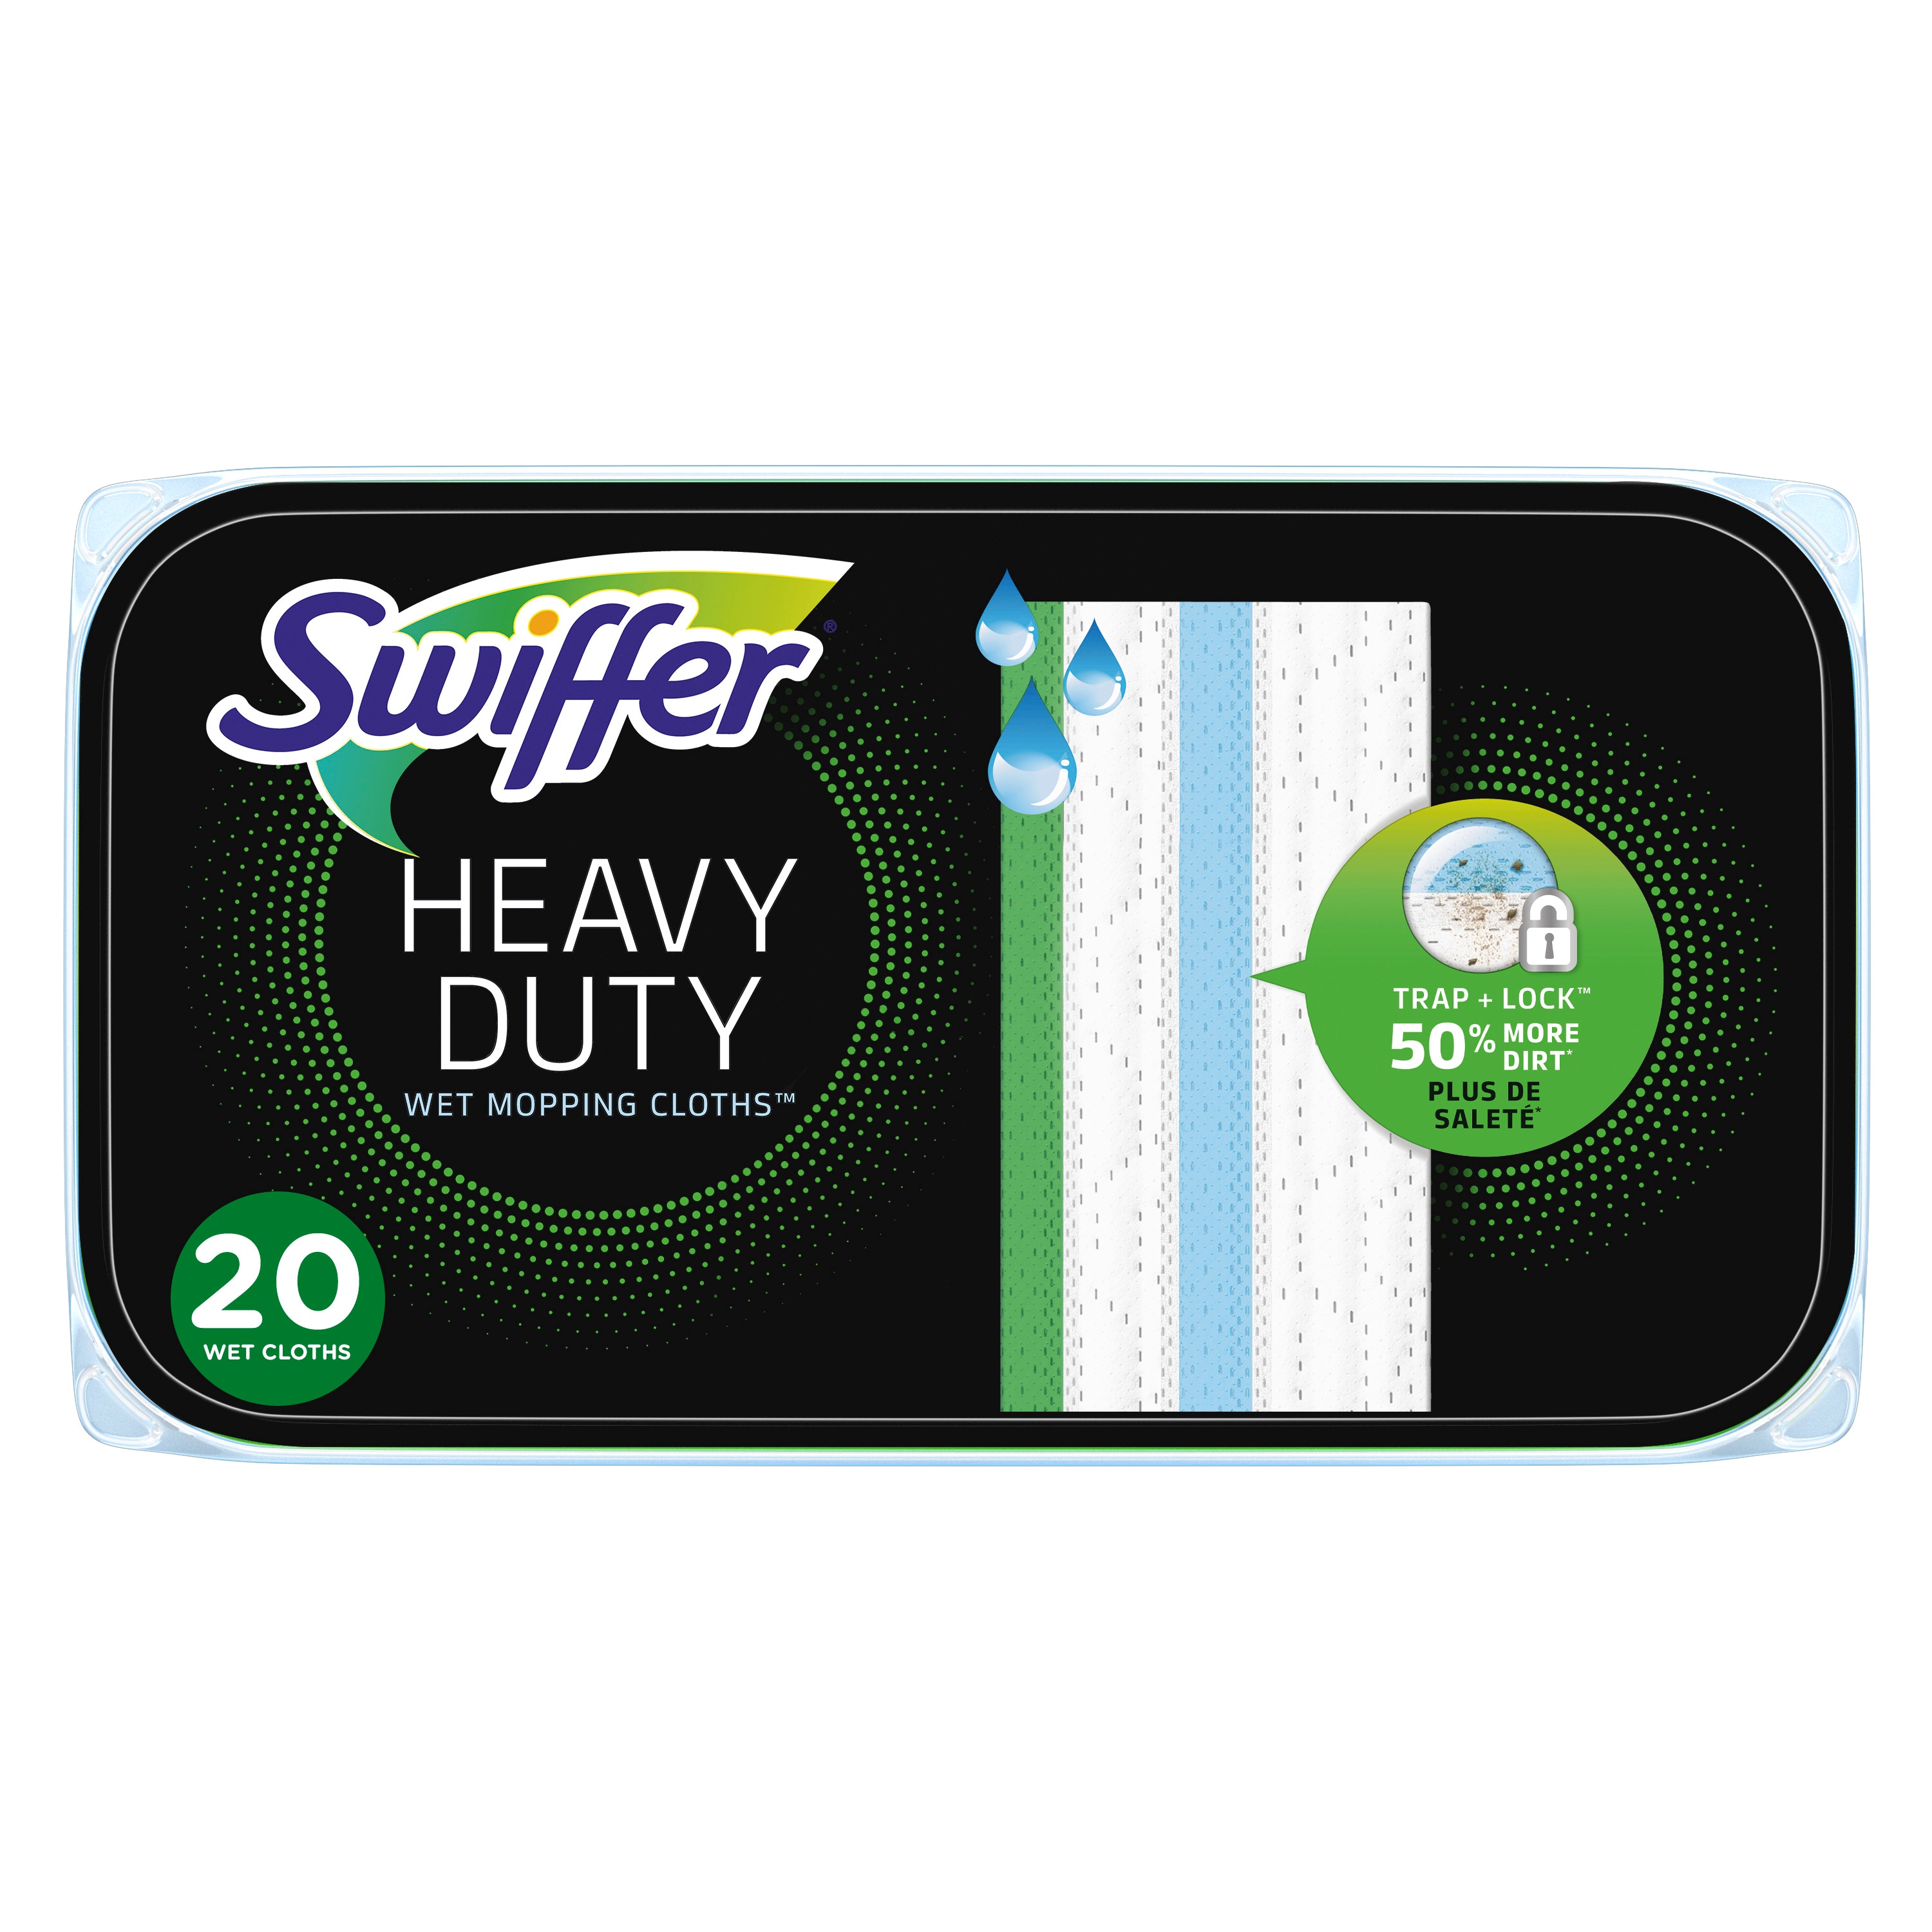 Swiffer Sweeper Wet Fresh Scent Cellulose Fiber/Polypropylene Refill  (24-Pack)